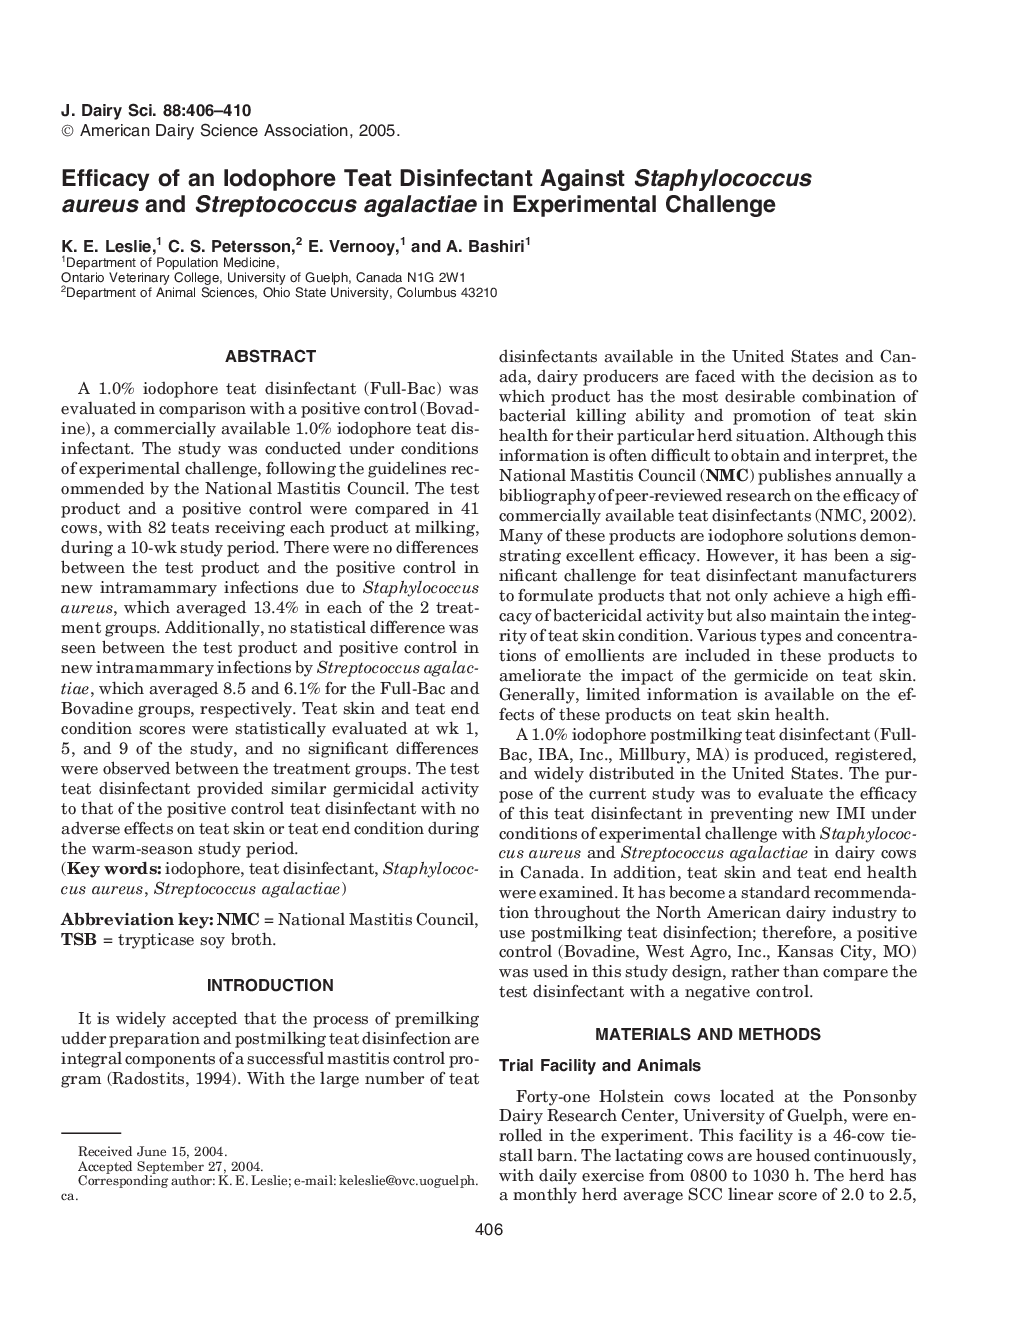 Efficacy of an Iodophore Teat Disinfectant Against Staphylococcus aureus and Streptococcus agalactiae in Experimental Challenge